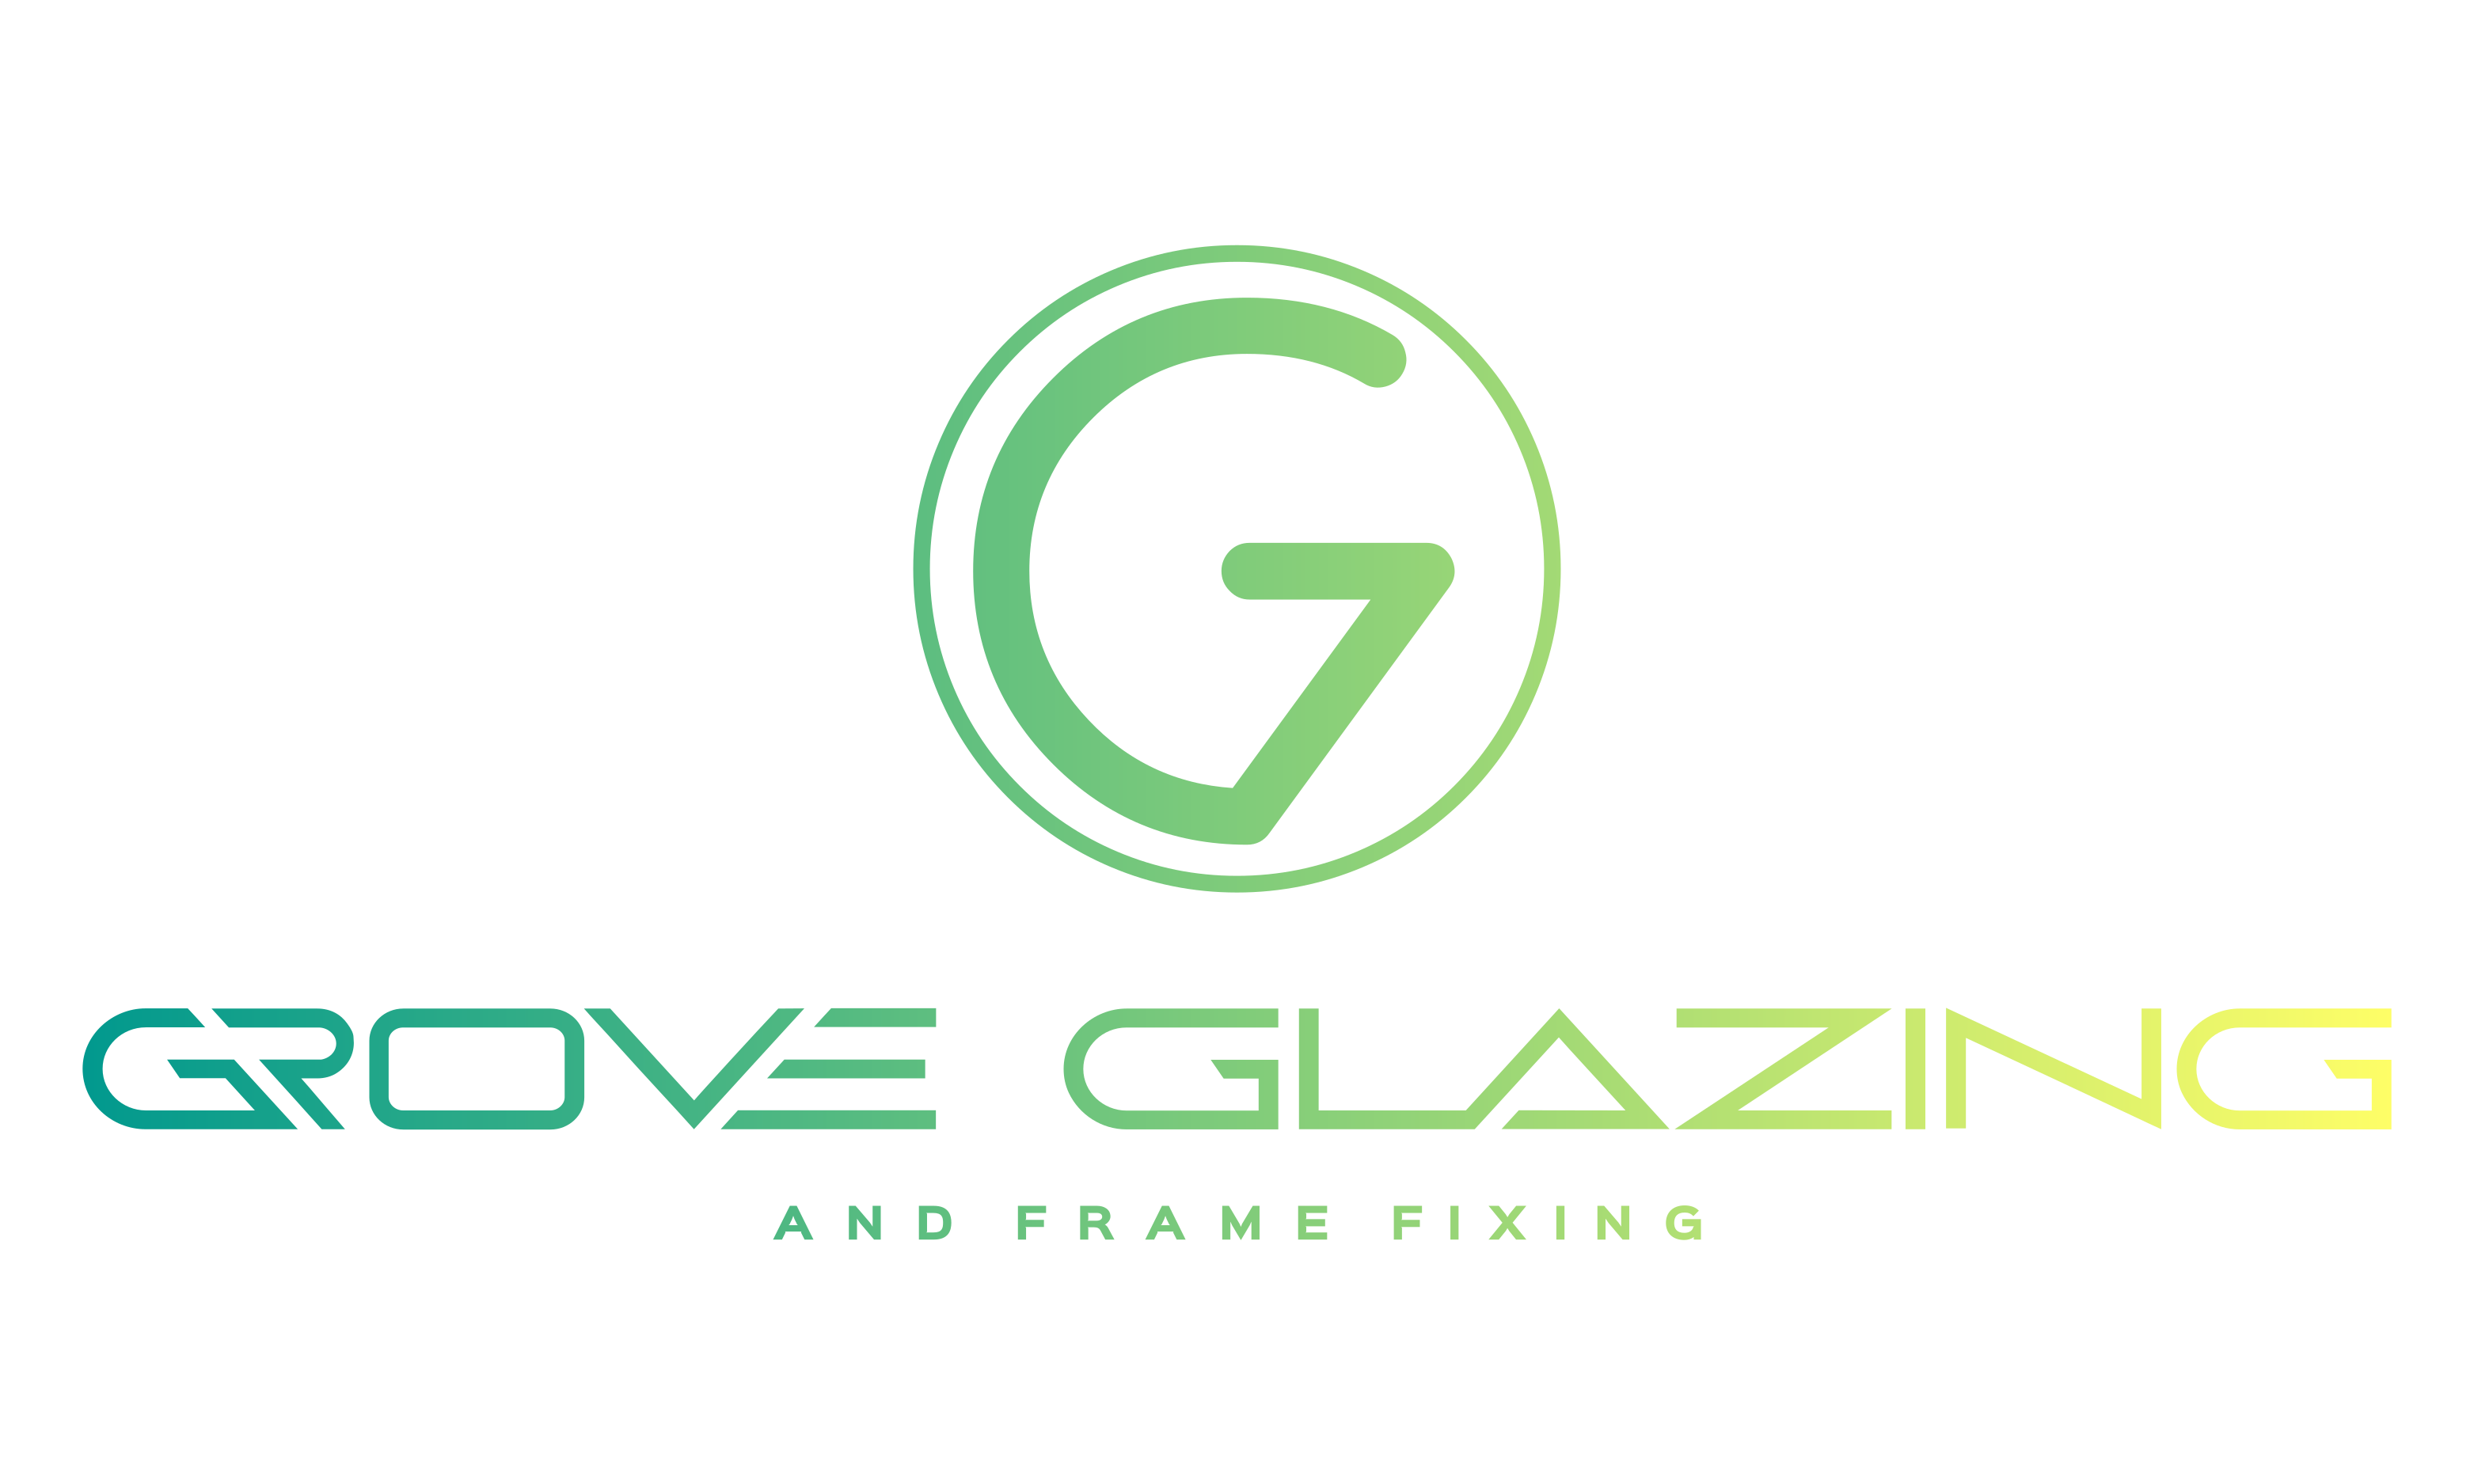 Grove glazing logo